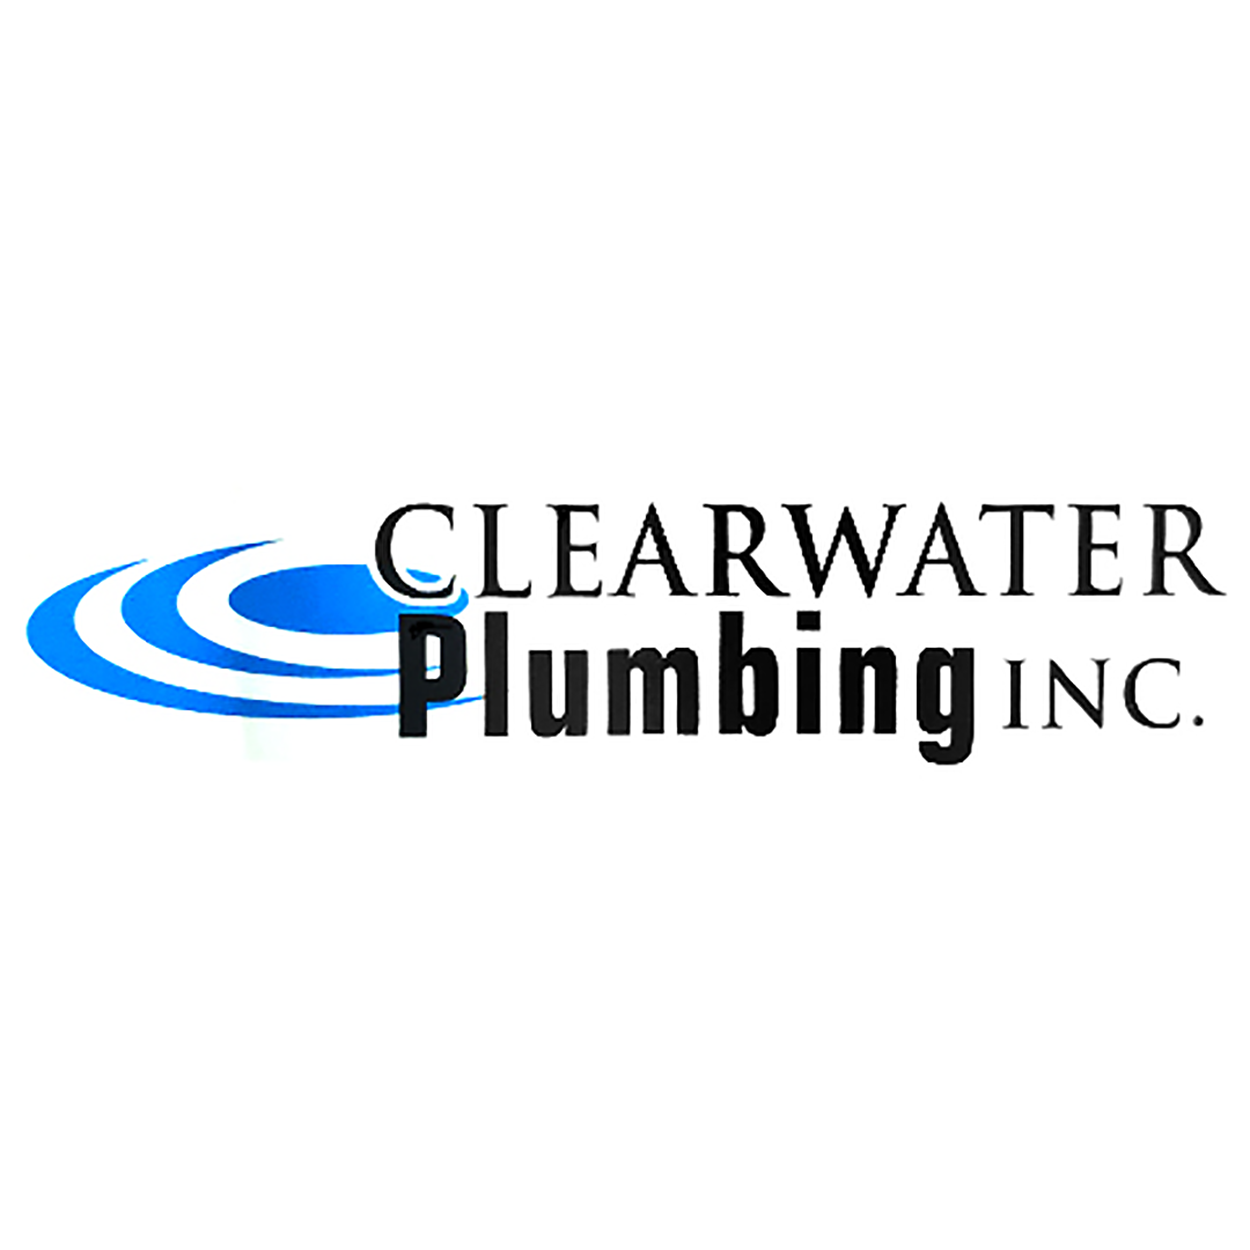 Clearwater Plumbing Inc.